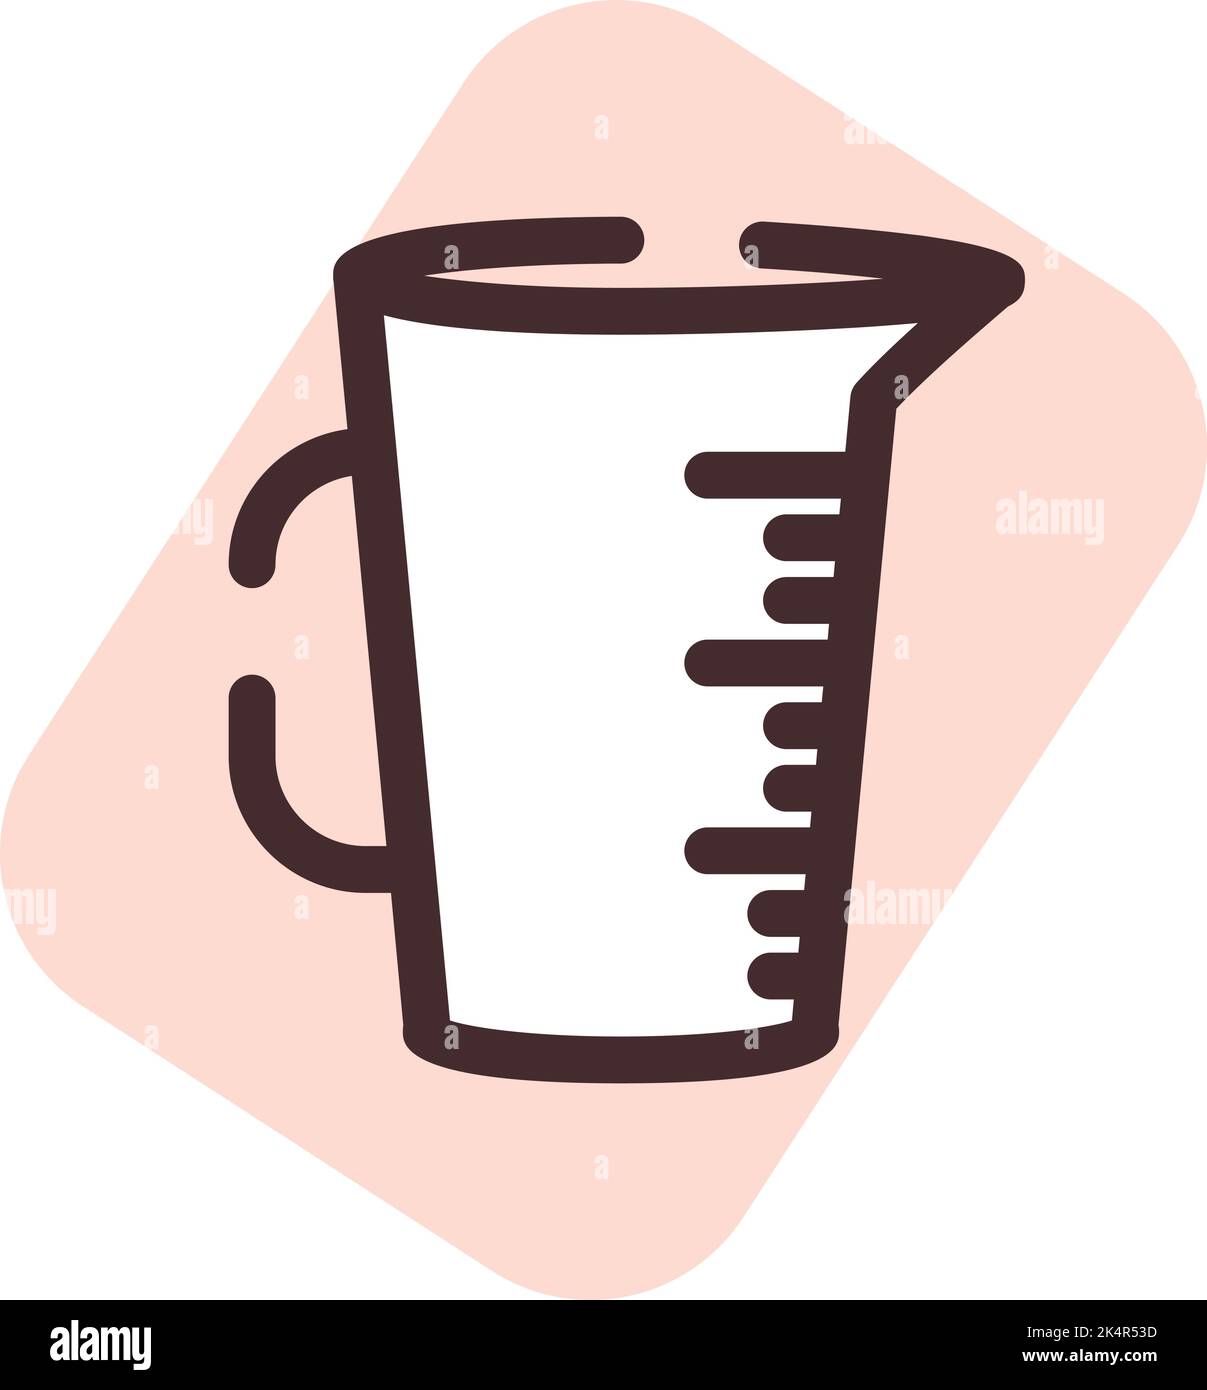 https://c8.alamy.com/comp/2K4R53D/kitchen-measuring-cup-illustration-vector-on-a-white-background-2K4R53D.jpg